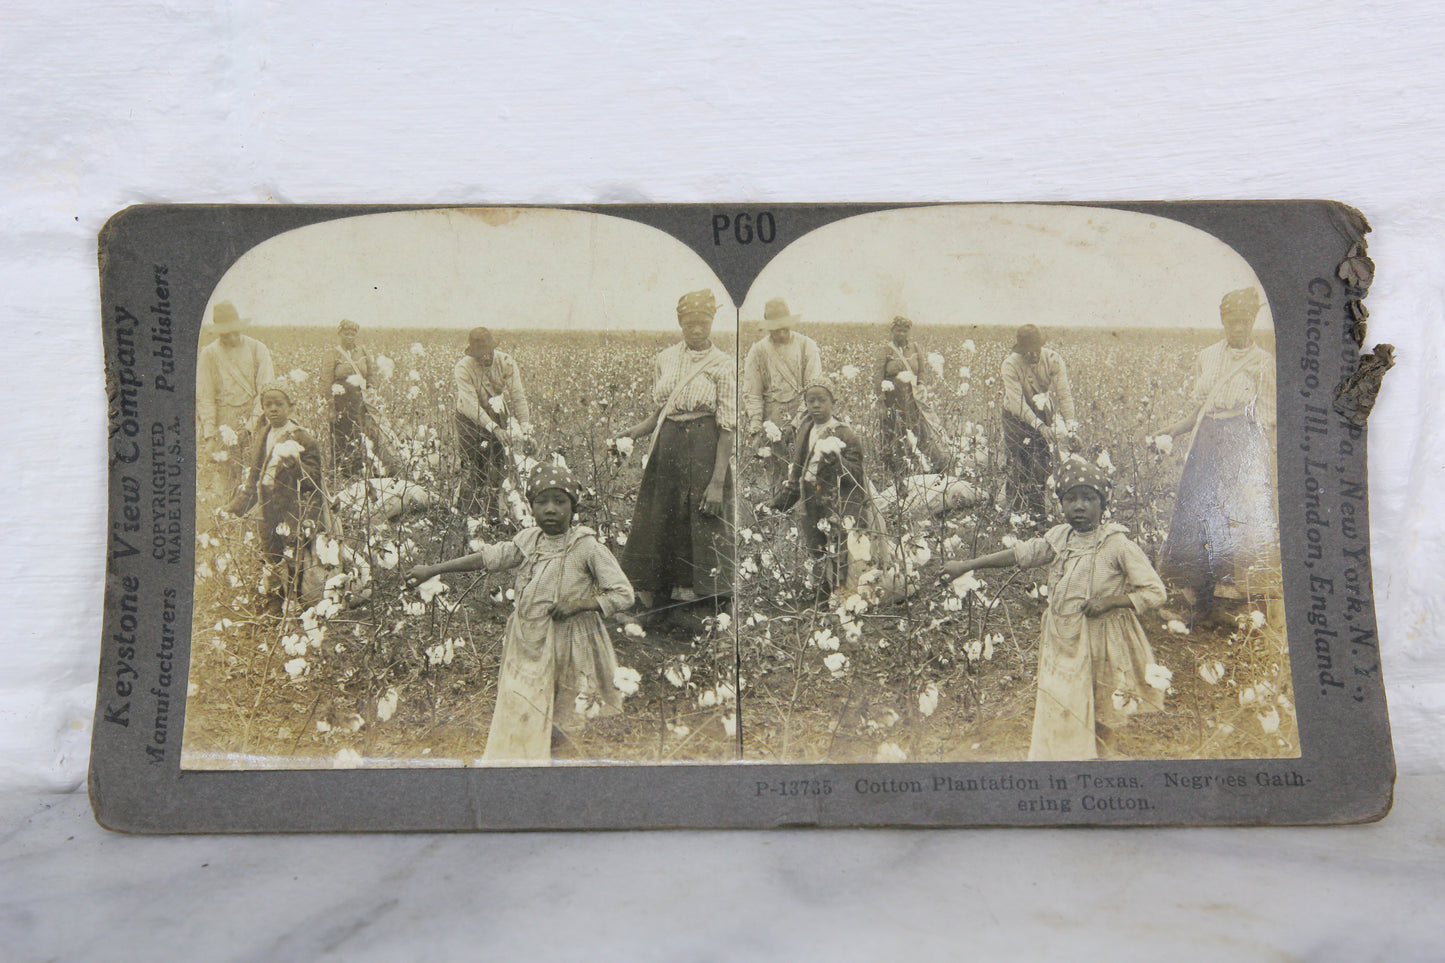 Gathering Cotton on a Southern Plantation, Dallas, Texas - Keystone Stereo Card